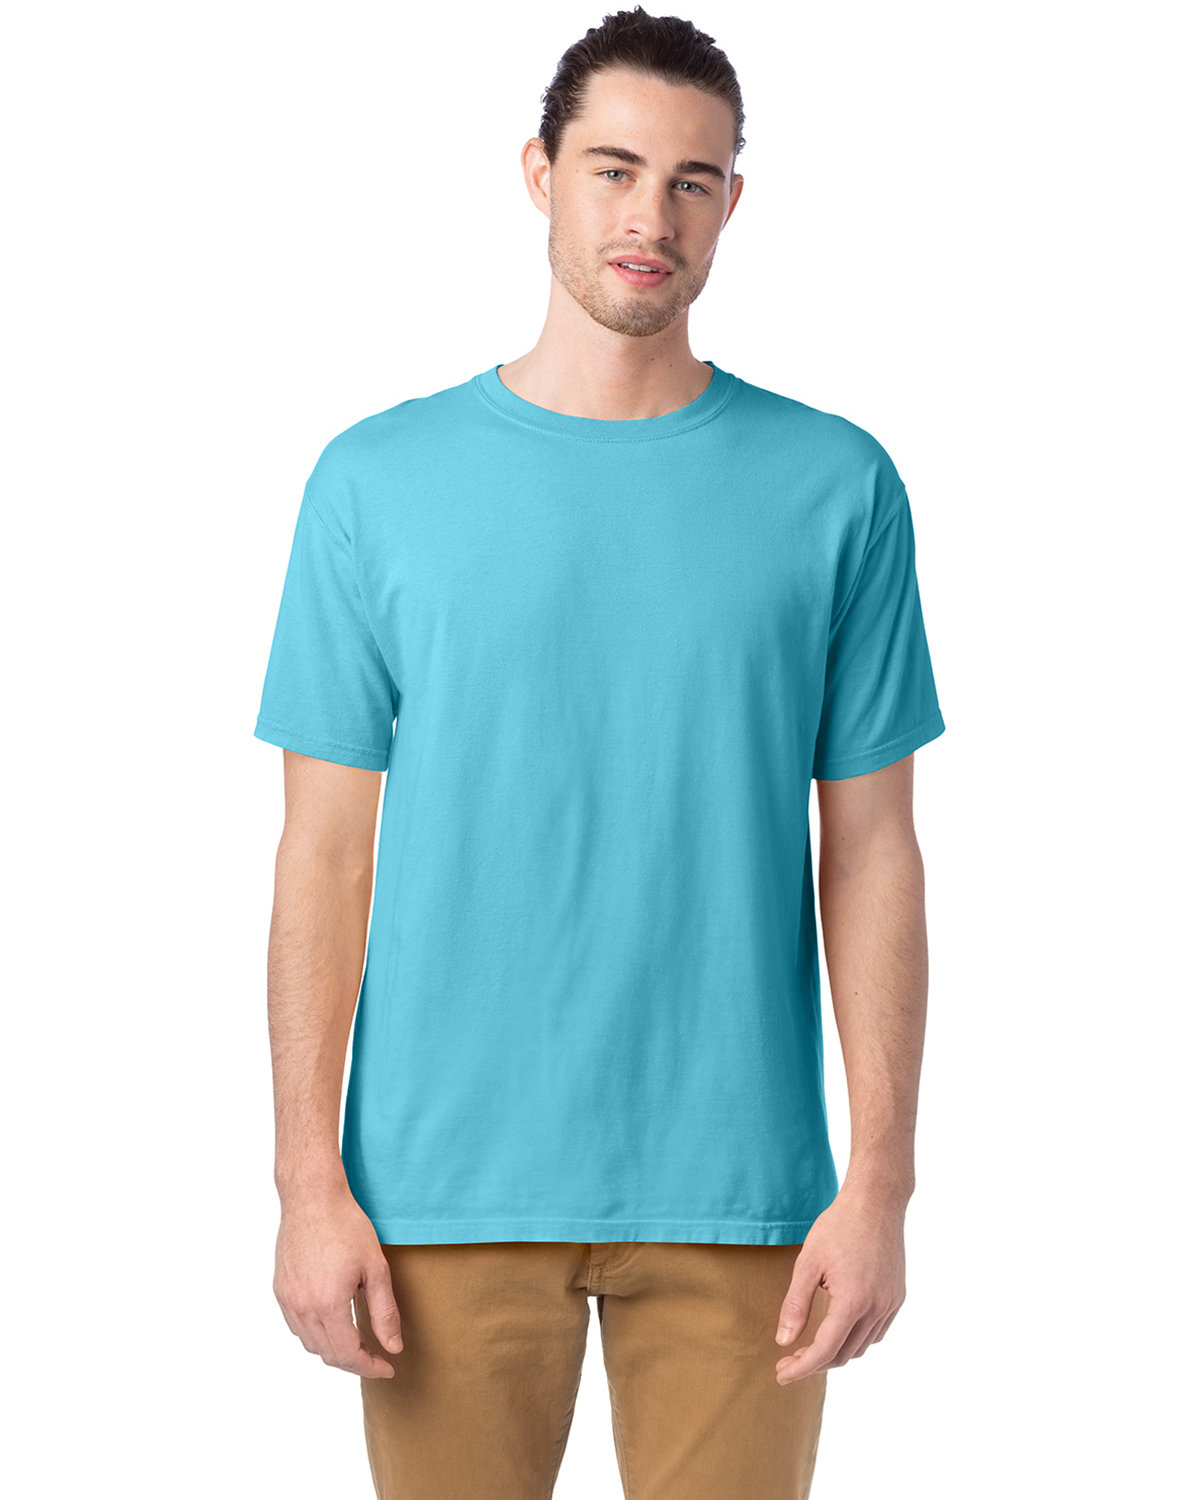 ComfortWash by Hanes Men's Garment-Dyed T-Shirt FRESHWATER 